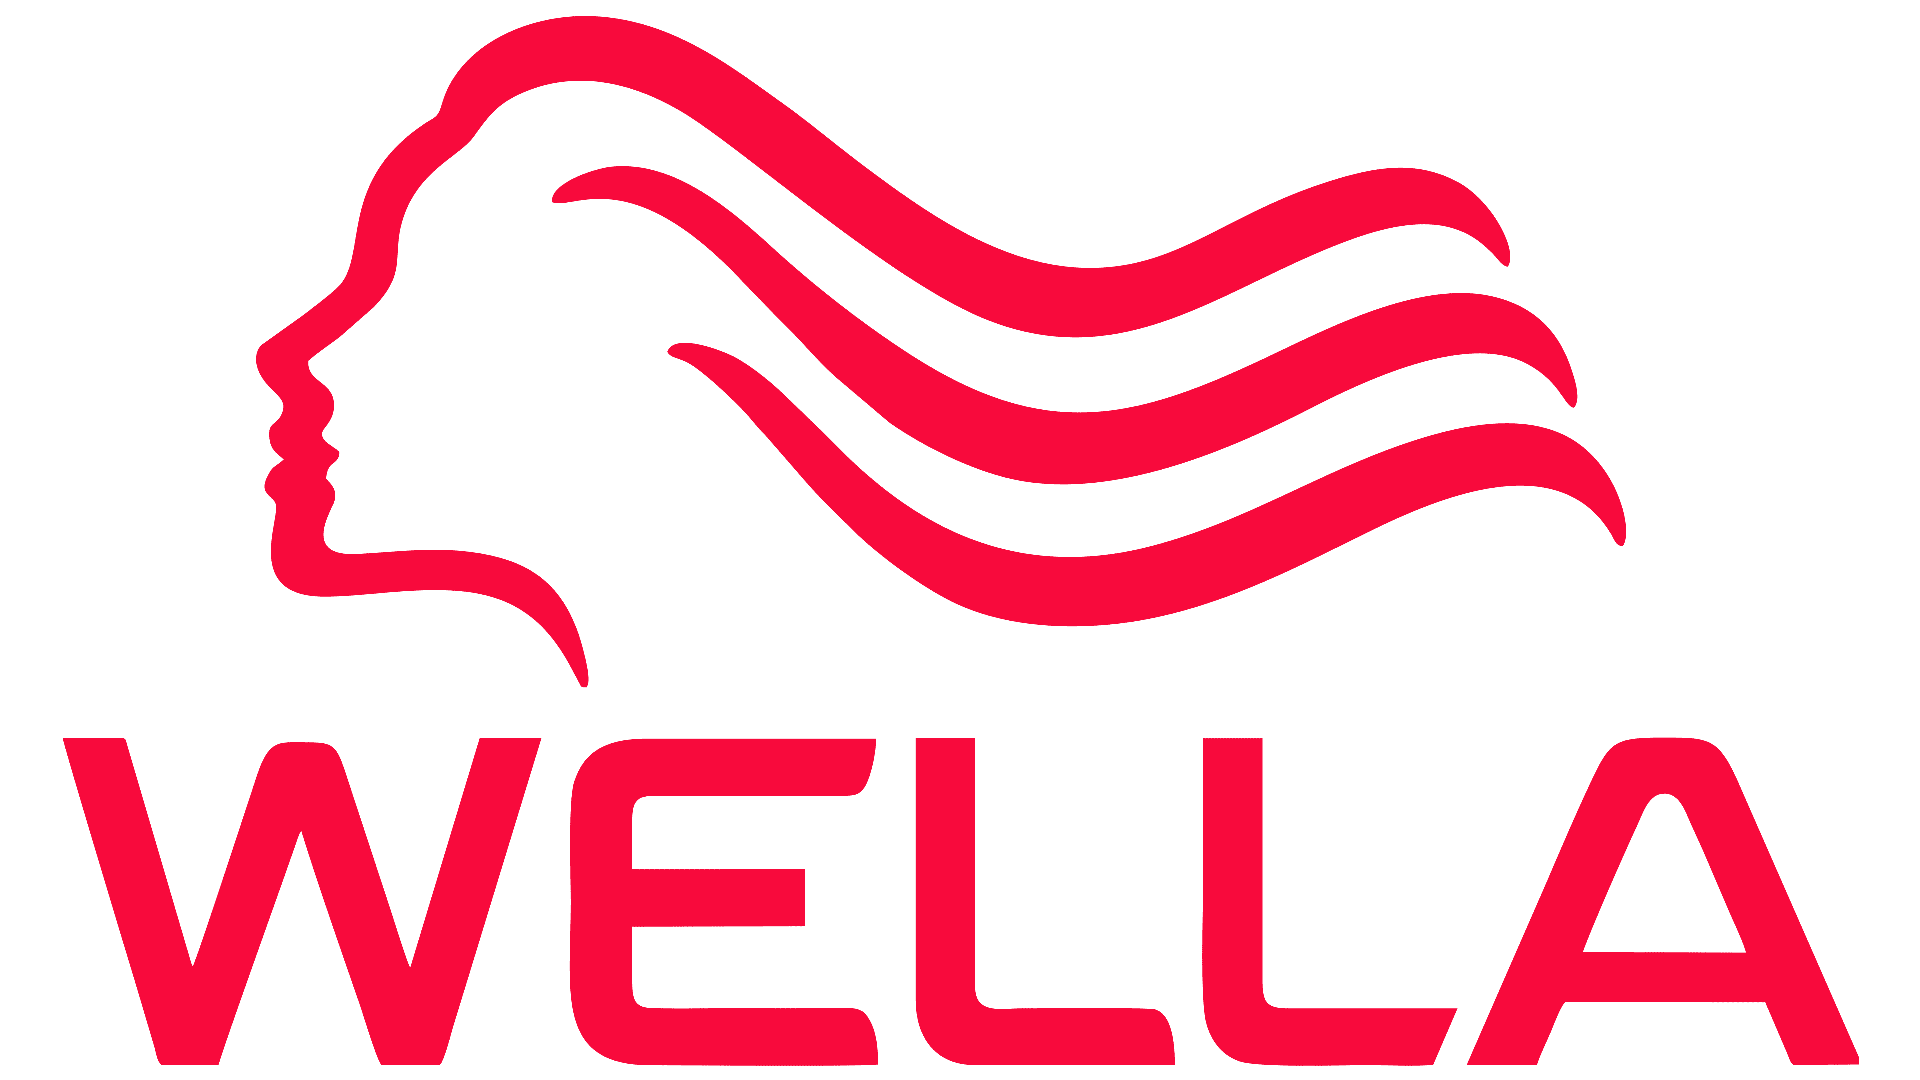 Brand: Wella